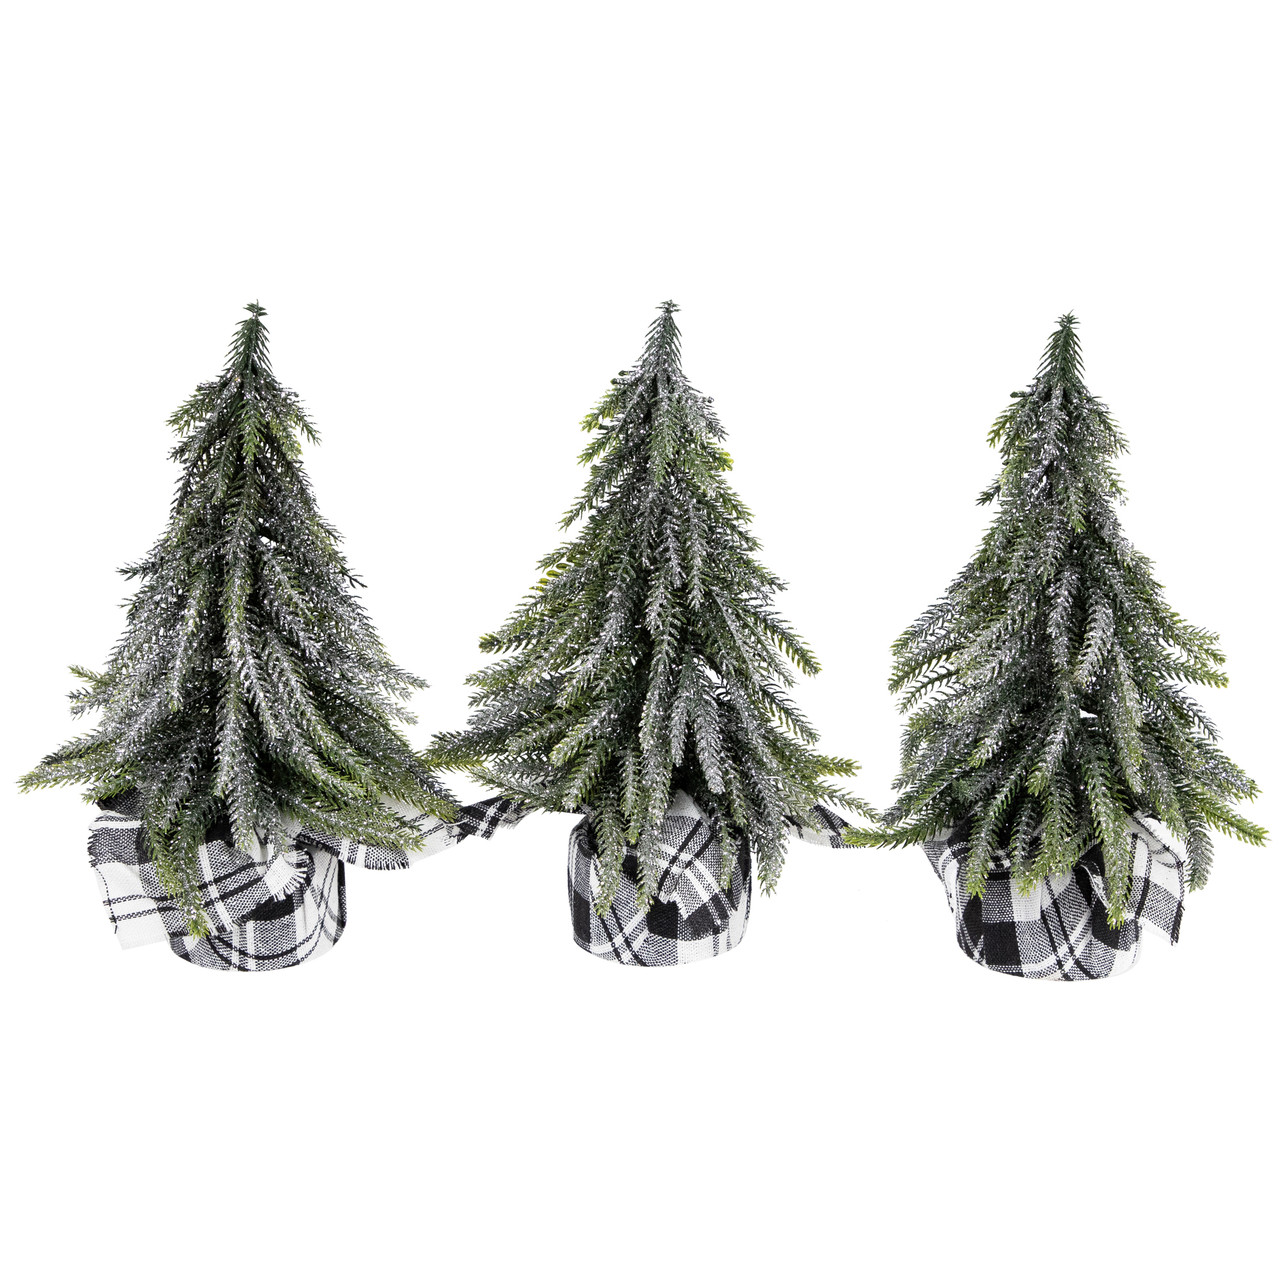 Mini Silvery Pine Downswept Artificial Christmas Trees - 9.5 - Set of 3